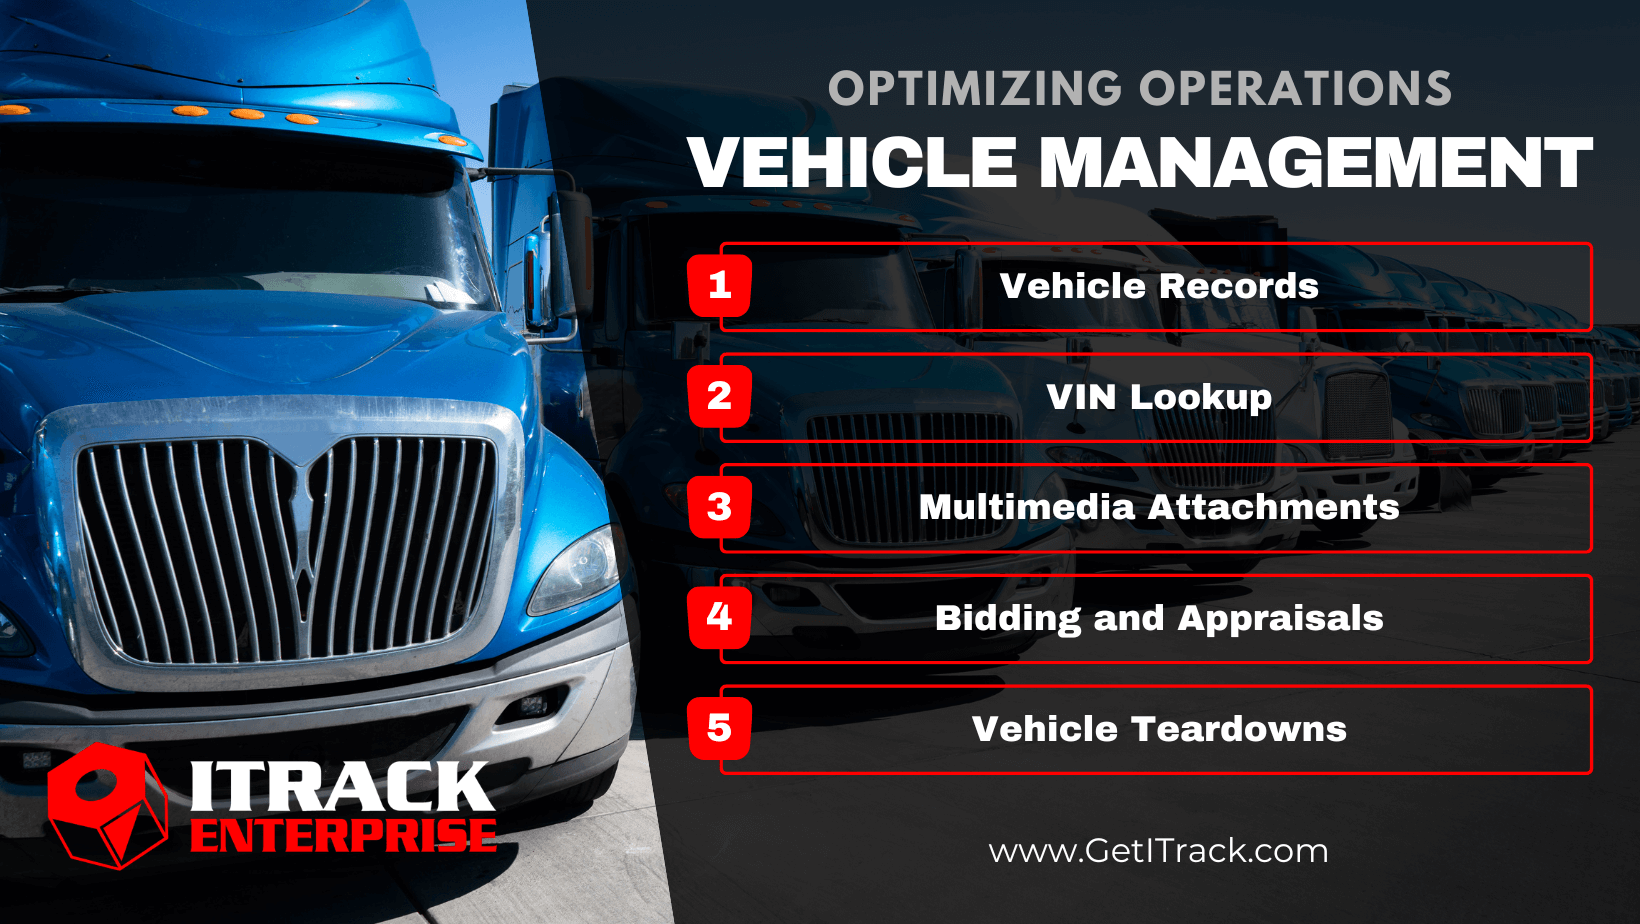 Vehicle Management - ITrack Enterprise